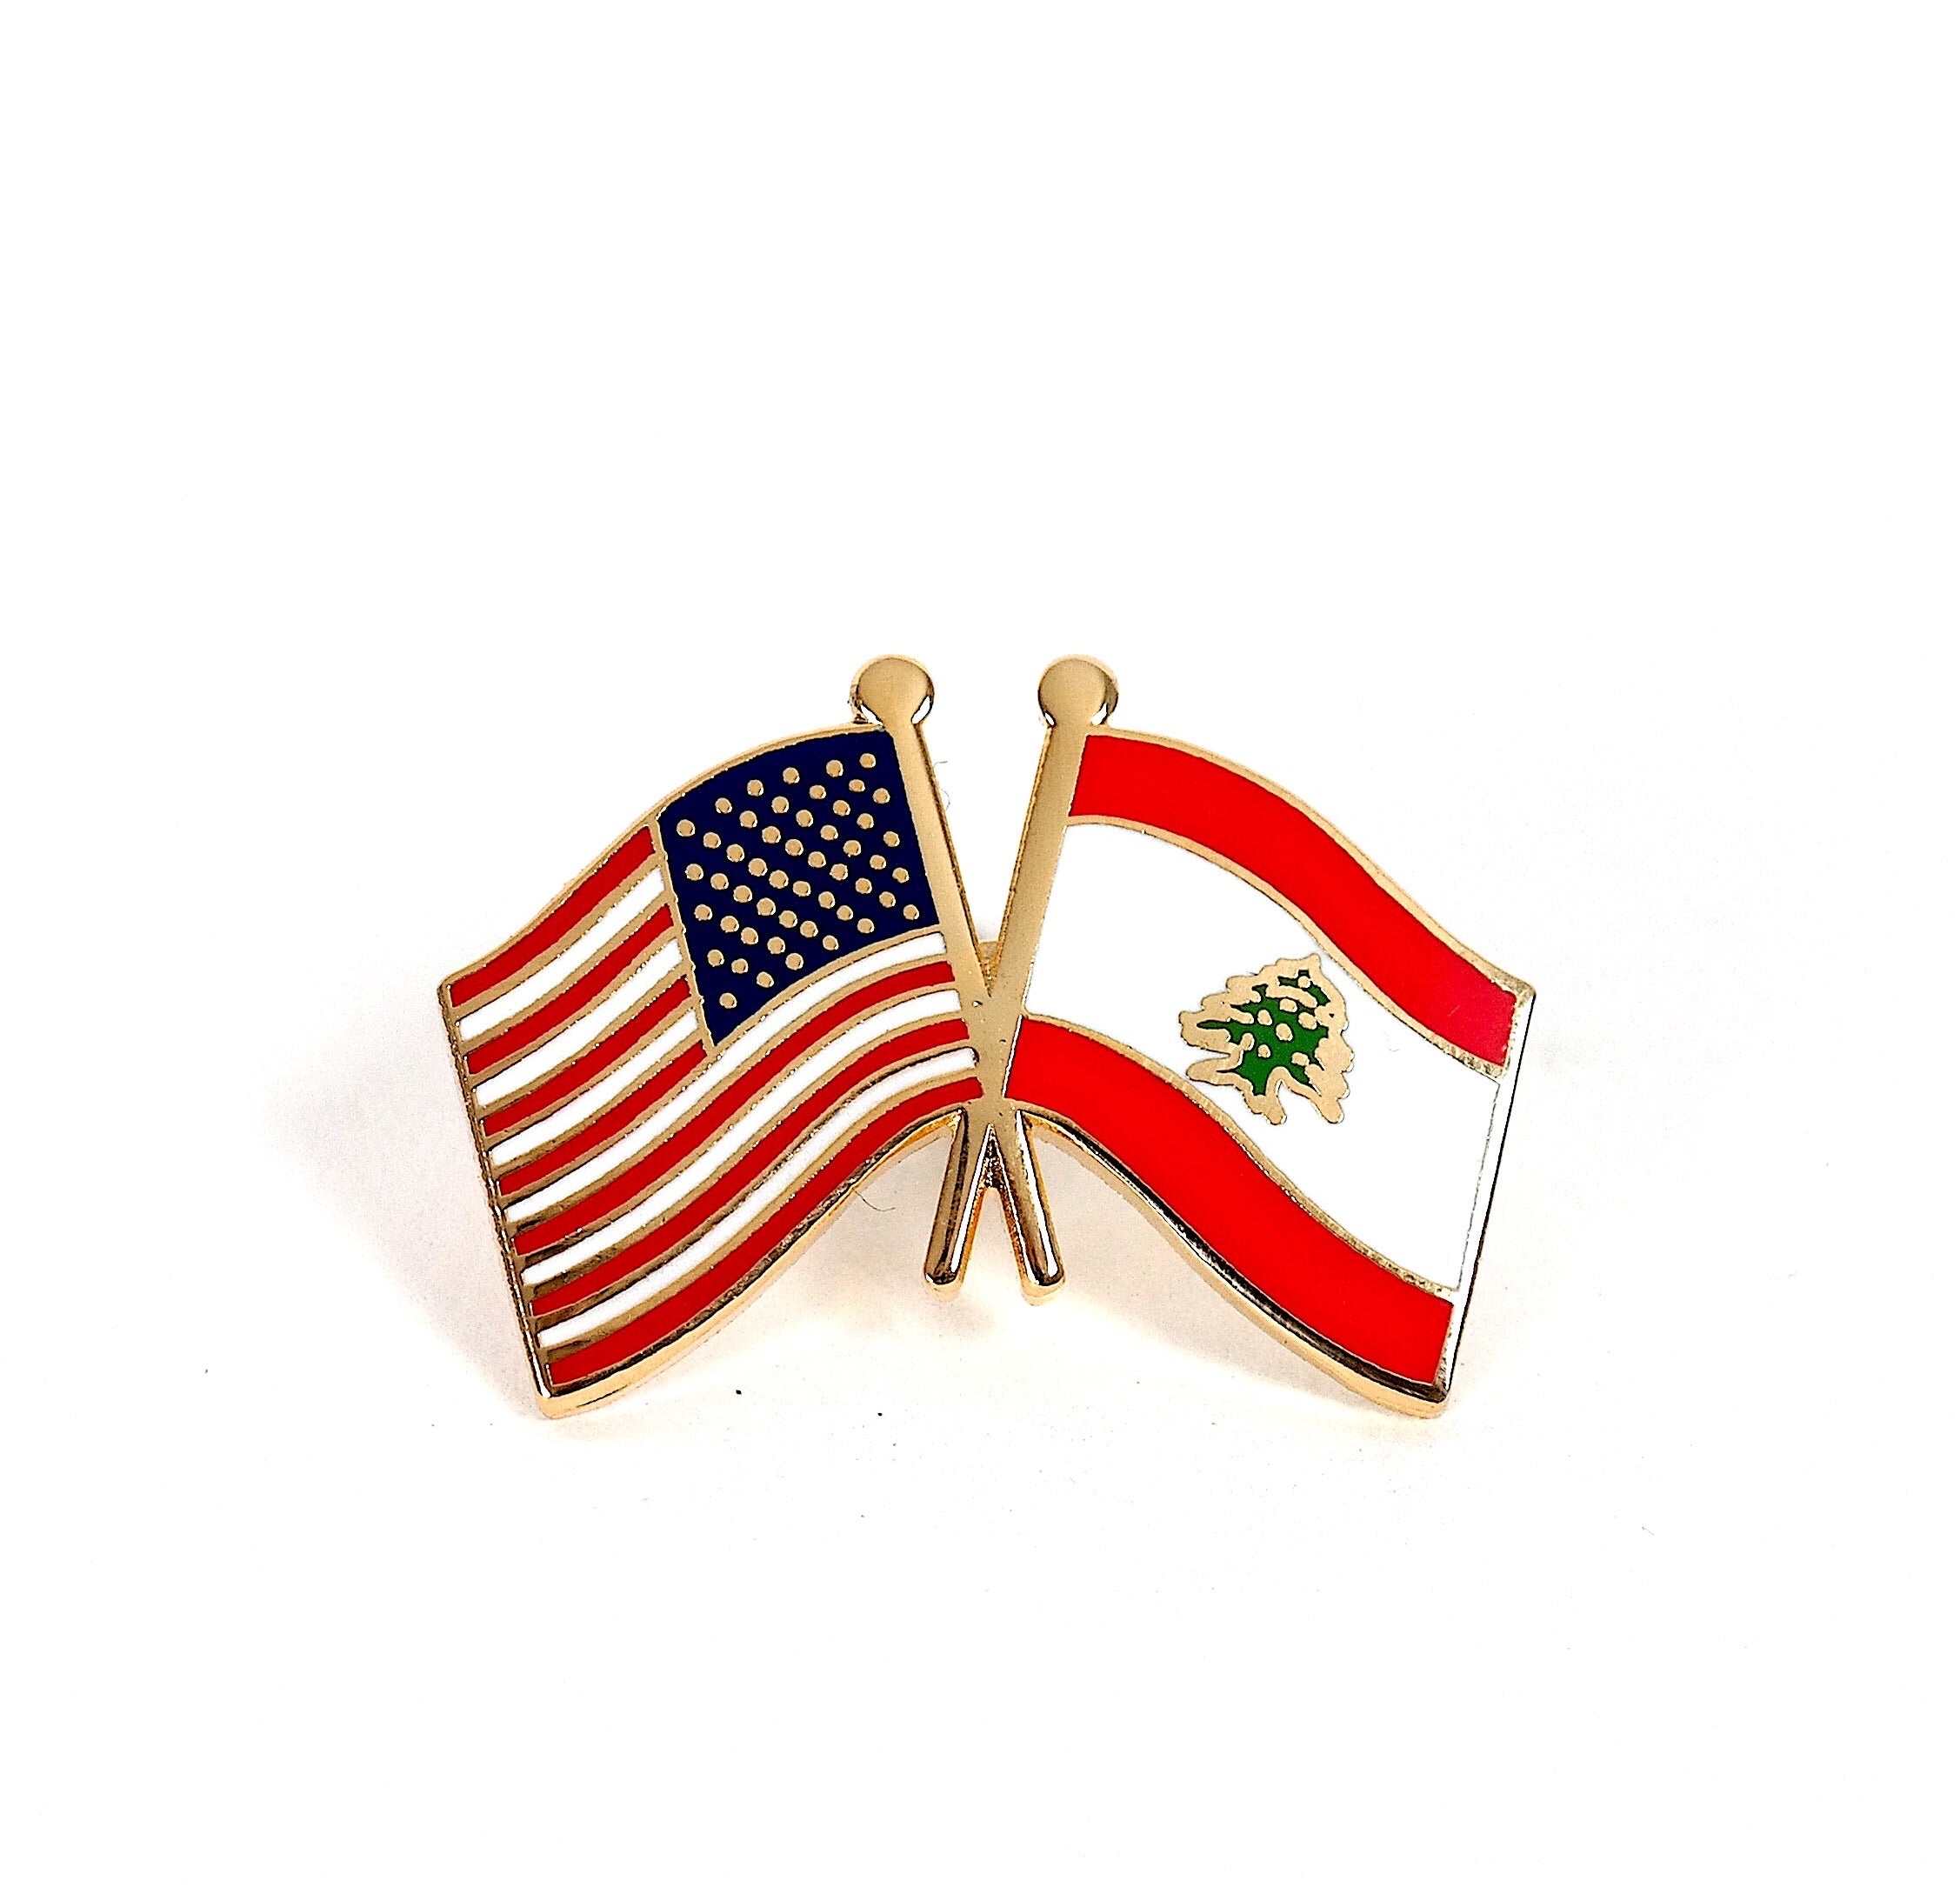 Lebanon & USA Friendship Flags Lapel Pin